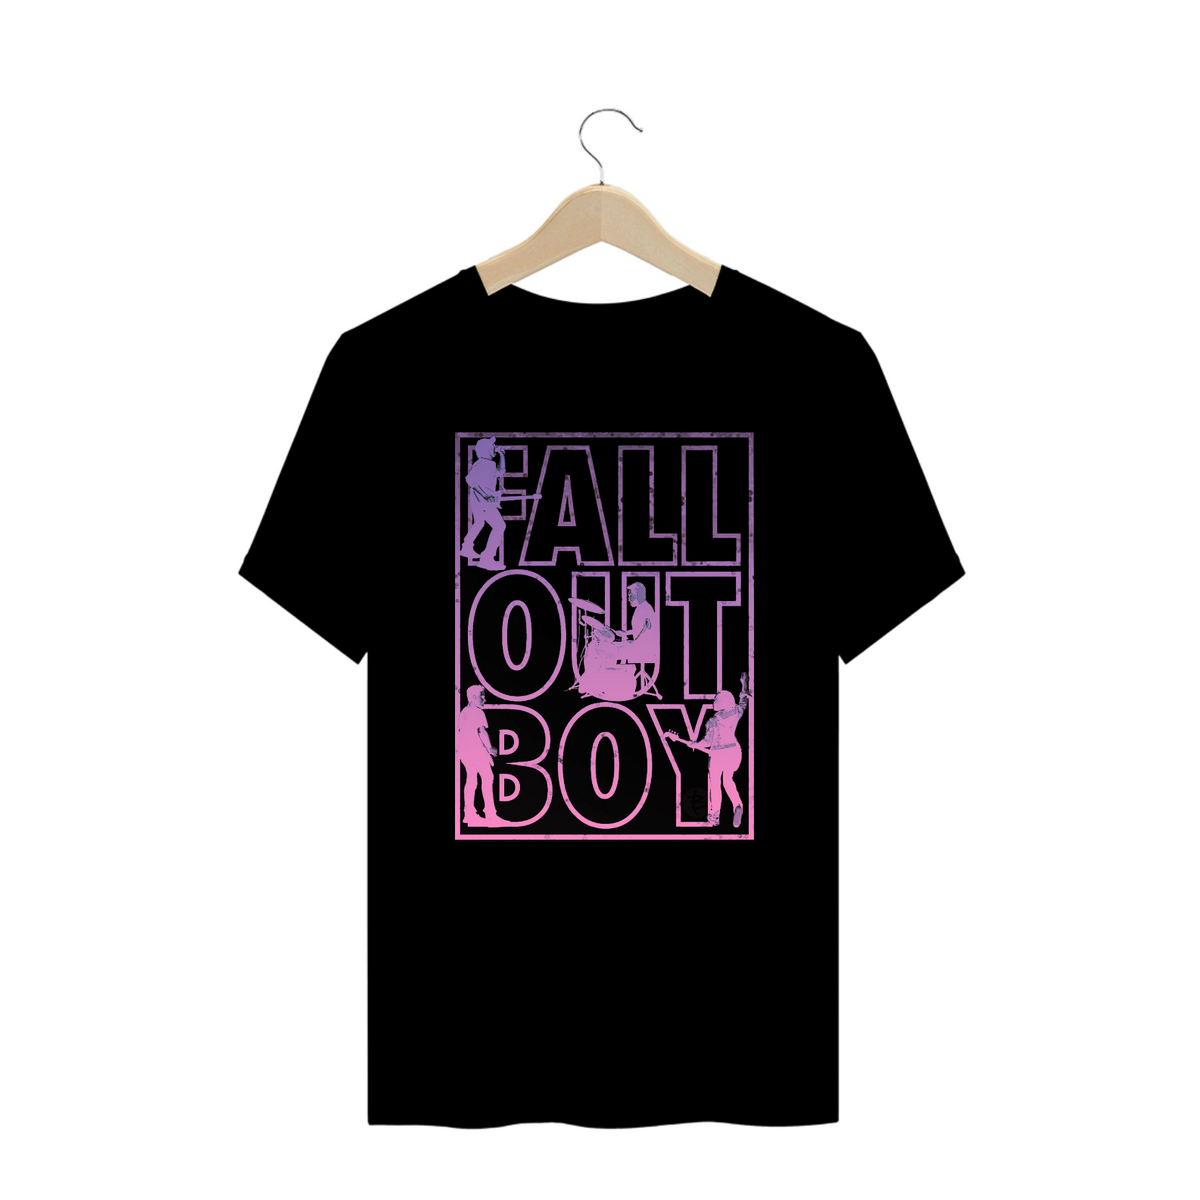 Nome do produto: Fall Out Boy - Plus Size